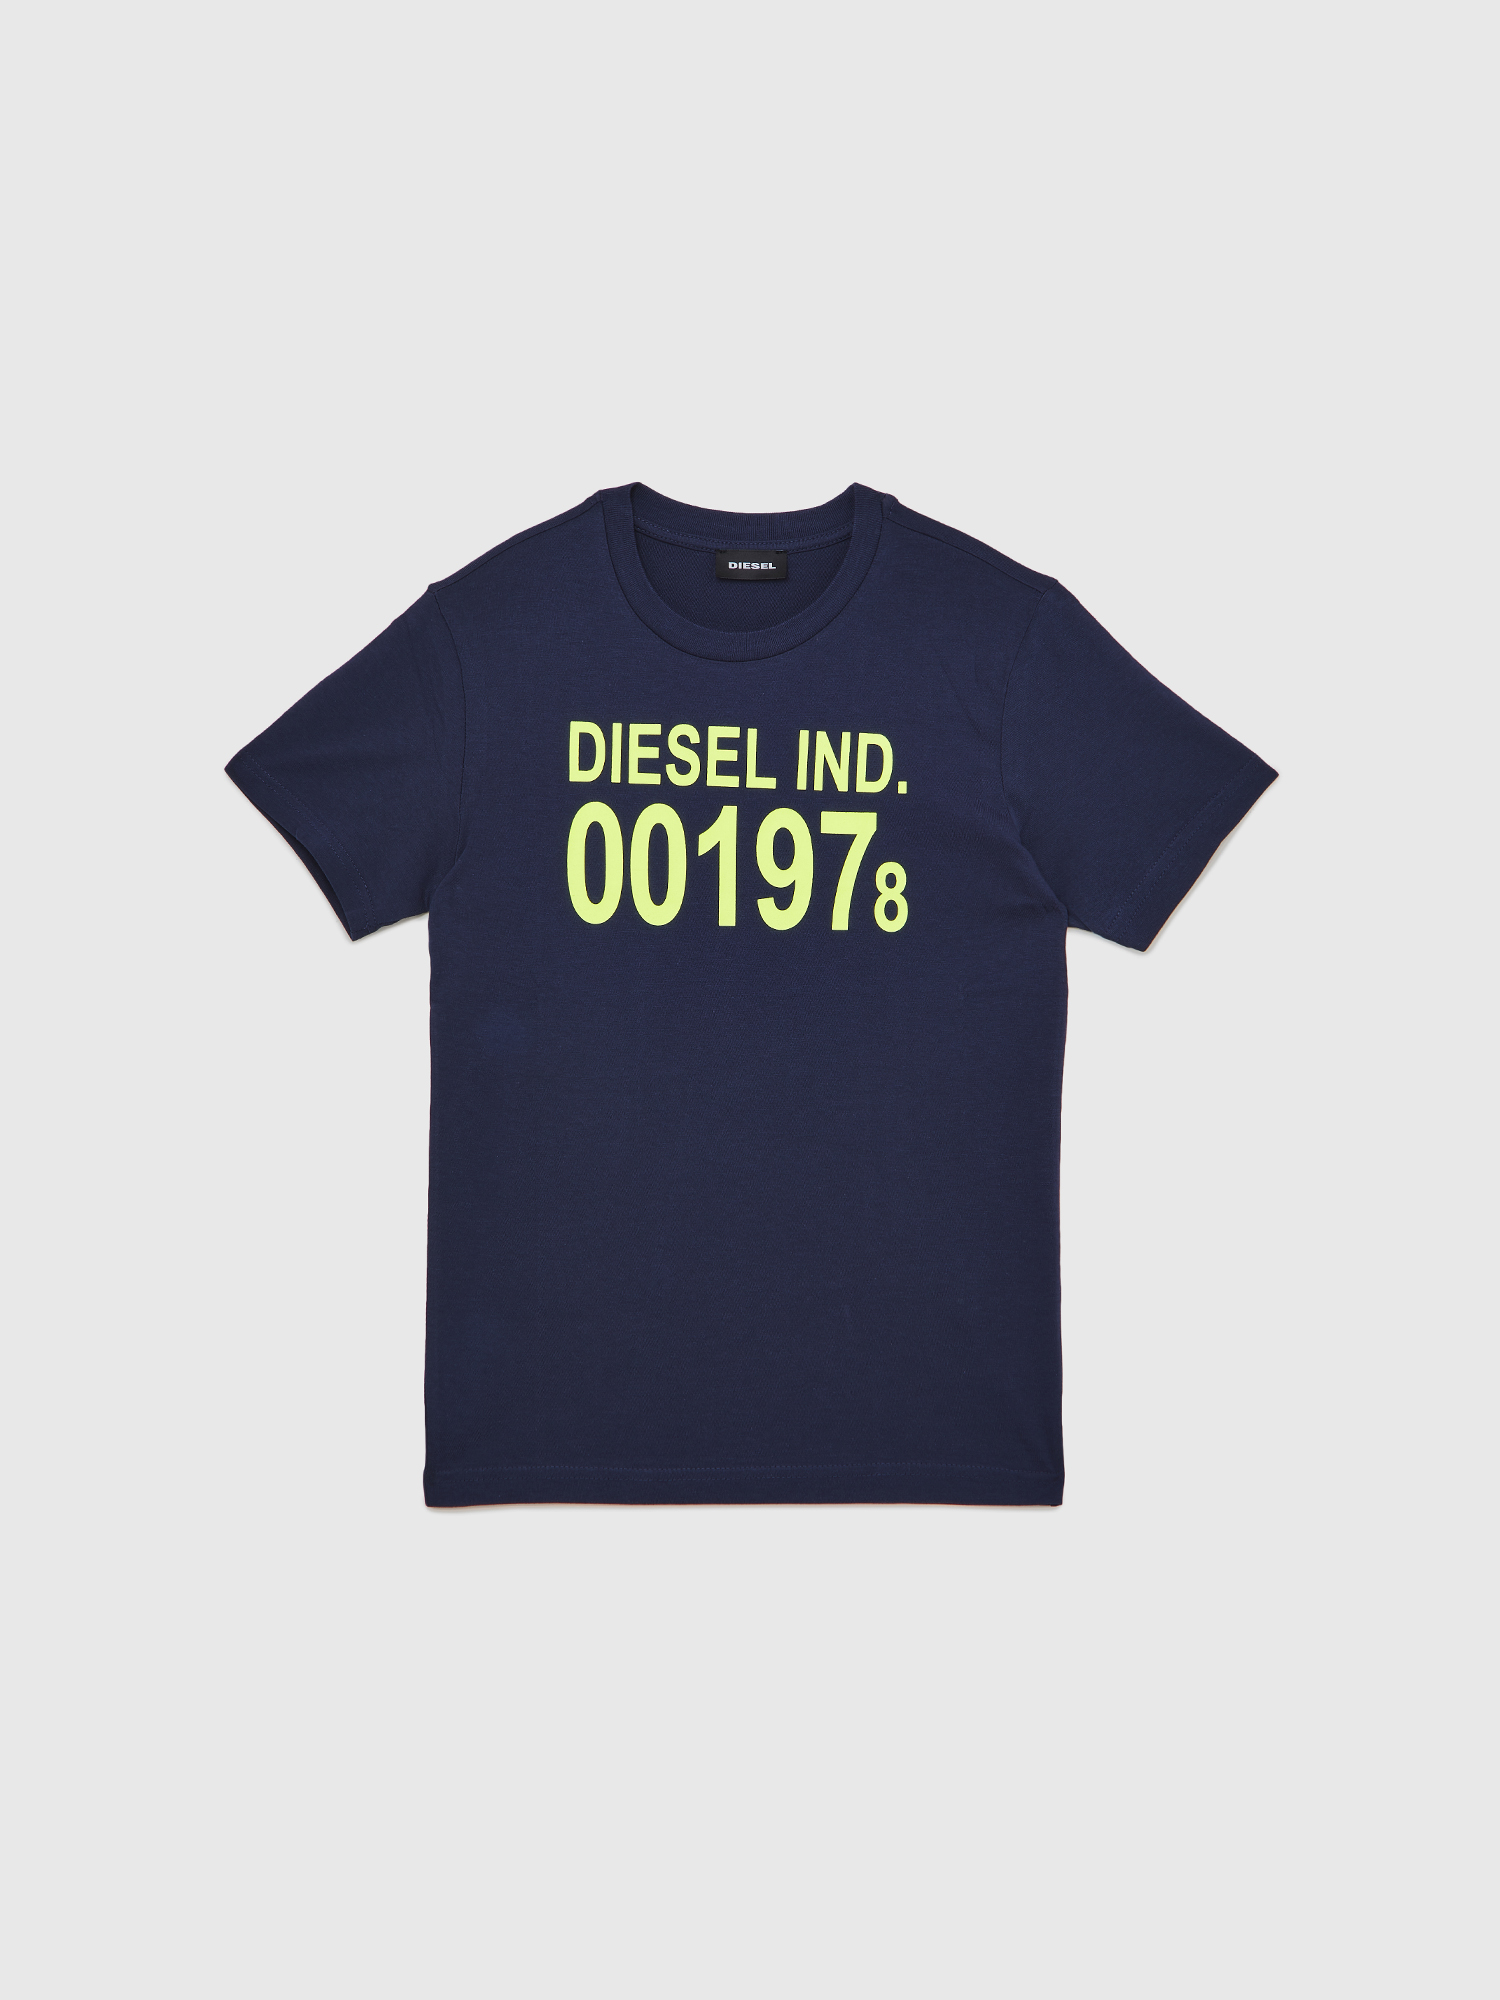 Diesel - TDIEGO001978, Dark Blue - Image 1